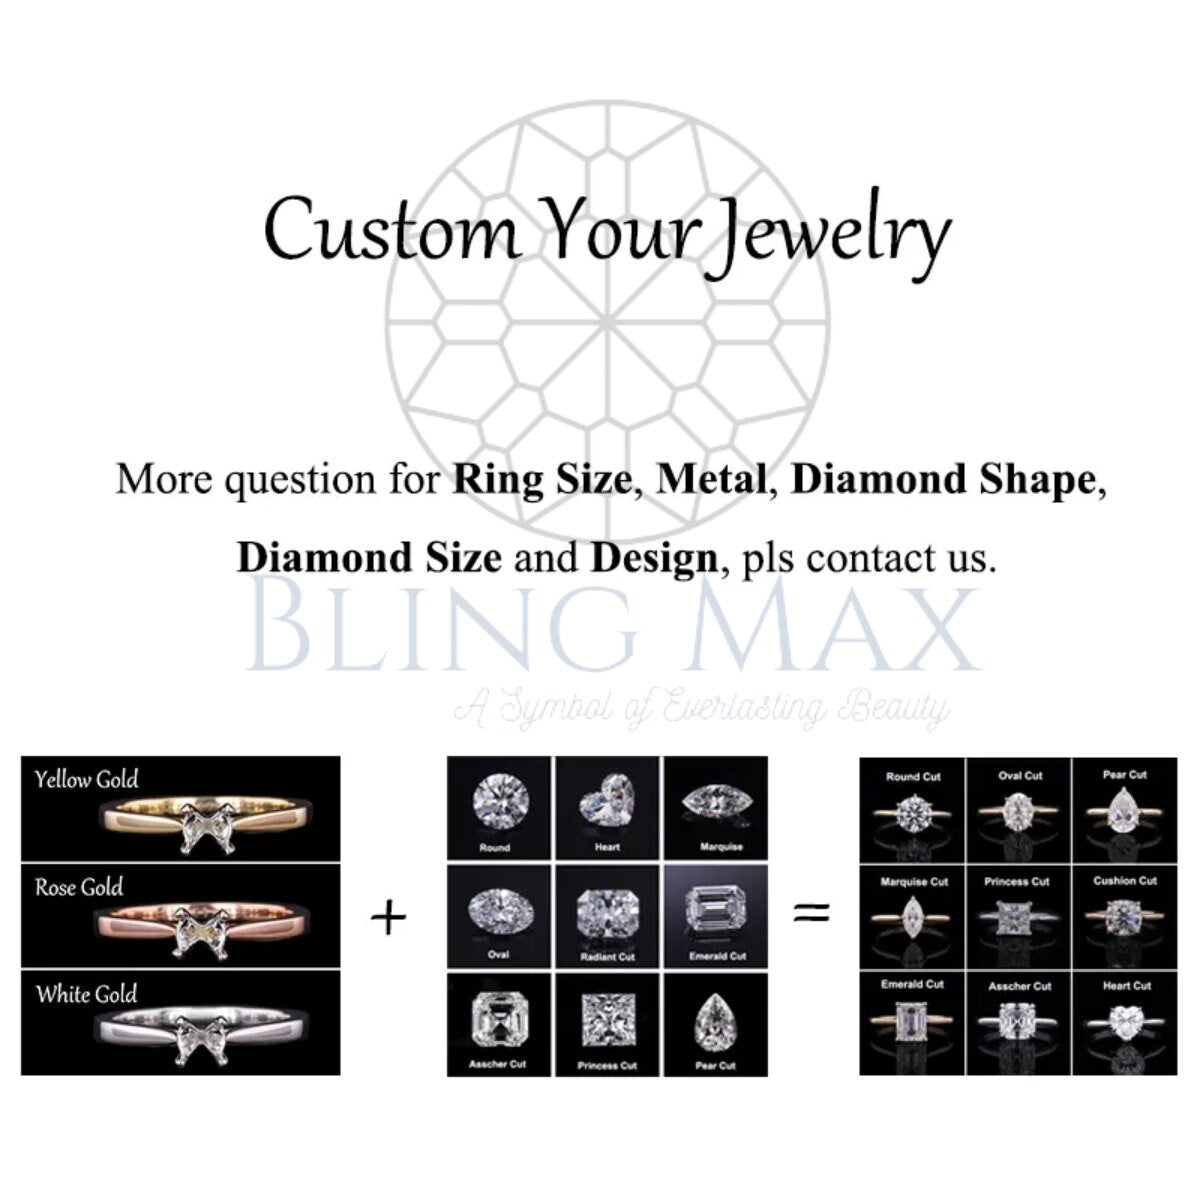 1.87 Carat Oval Cut Lab-Grown Halo Diamond Engagement Ring